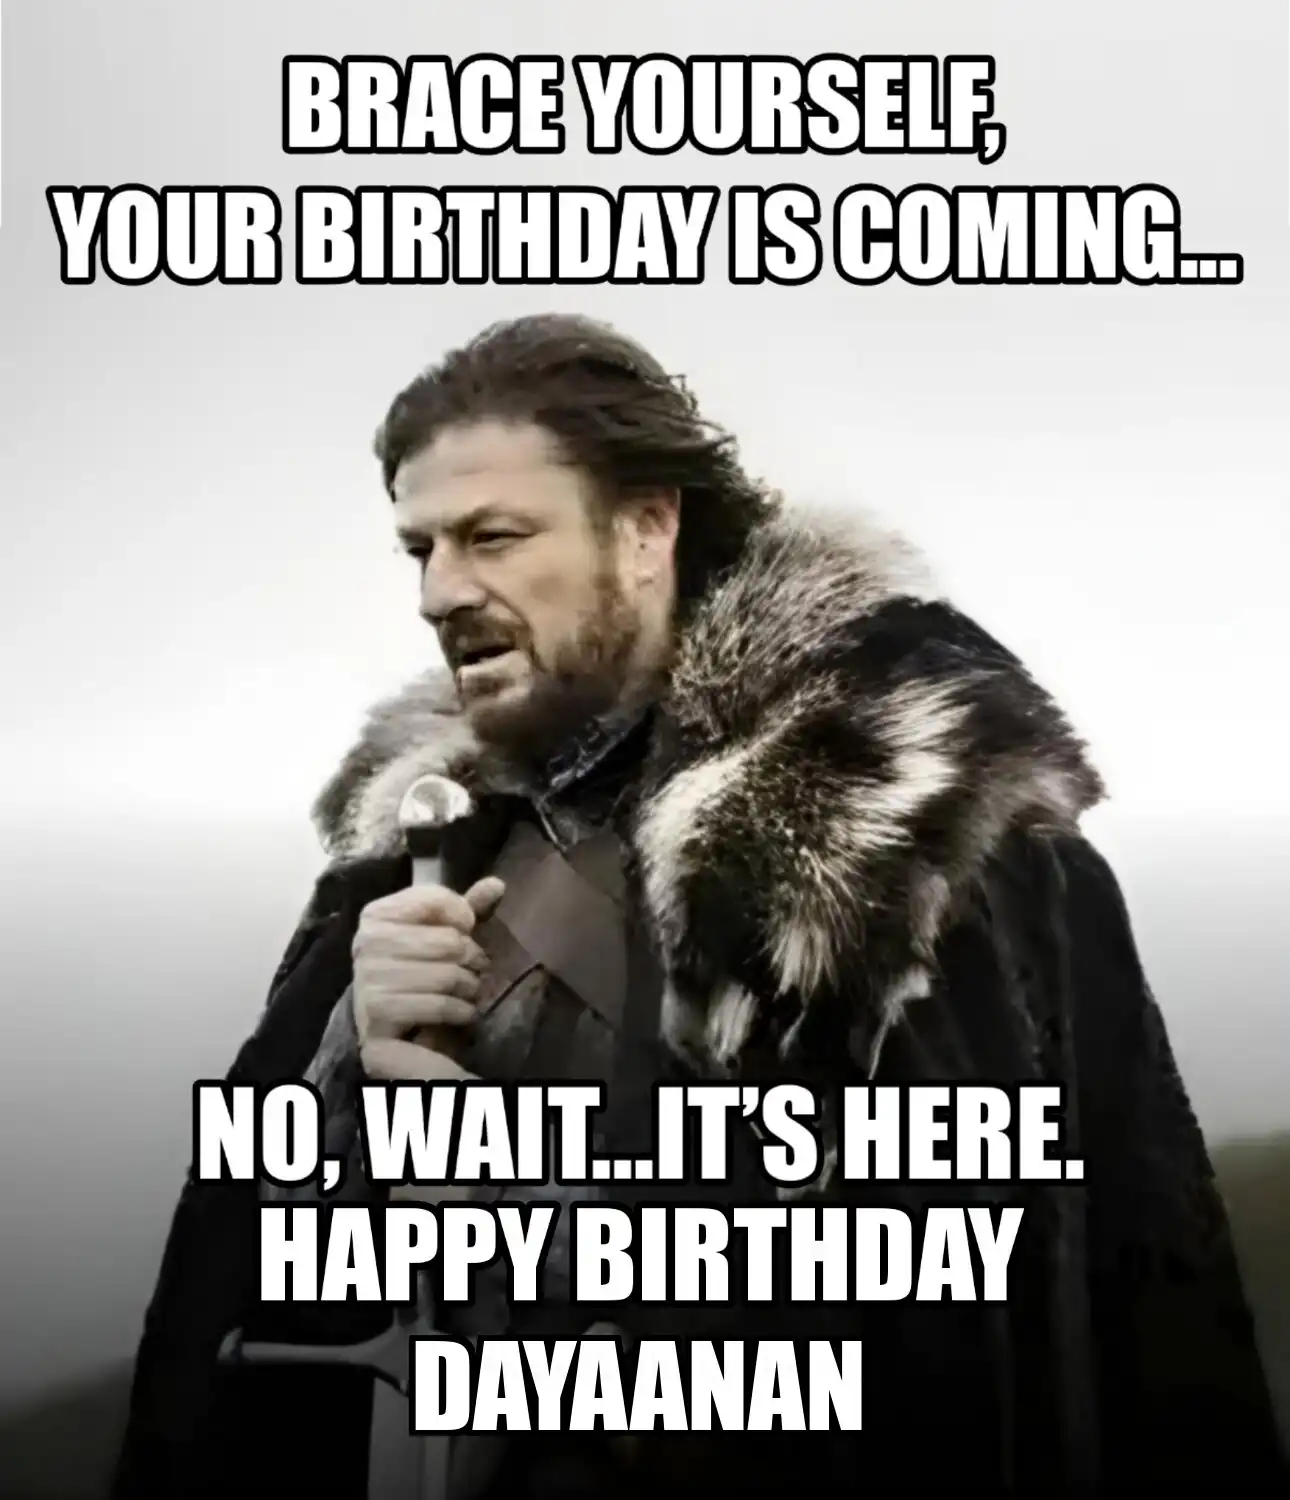 Happy Birthday Dayaanan Brace Yourself Your Birthday Is Coming Meme